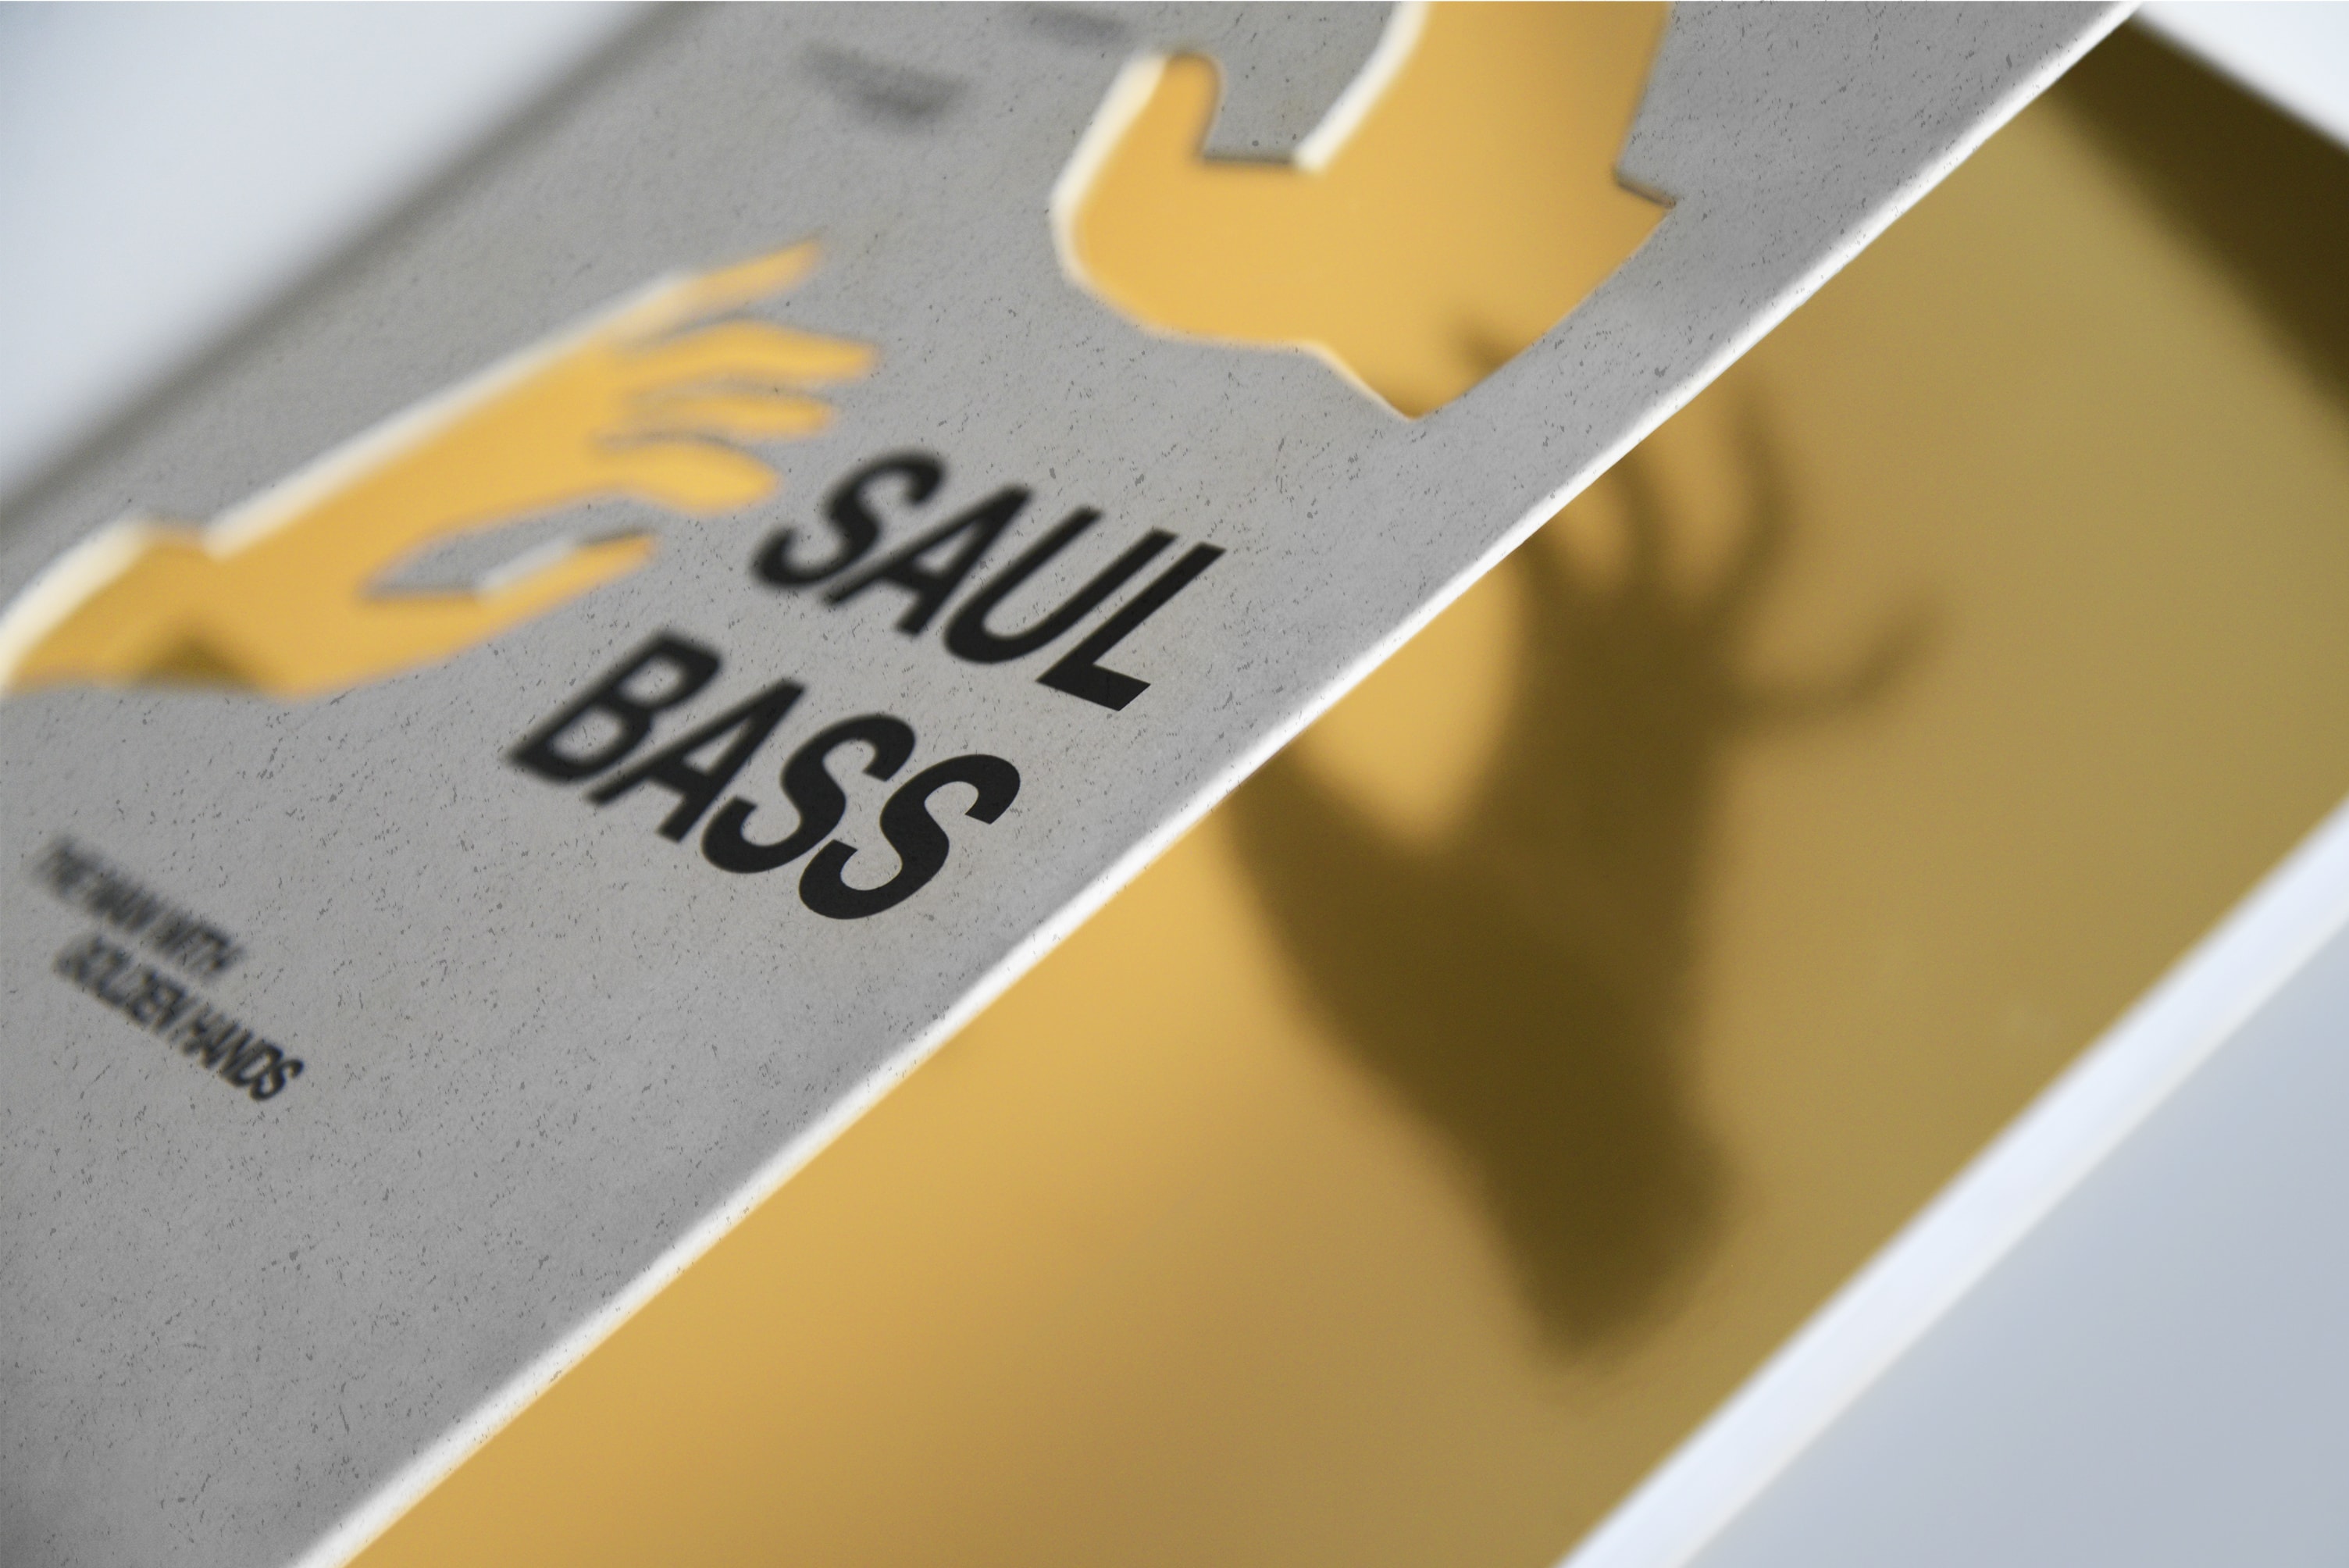 Saul Bass : Starting Work